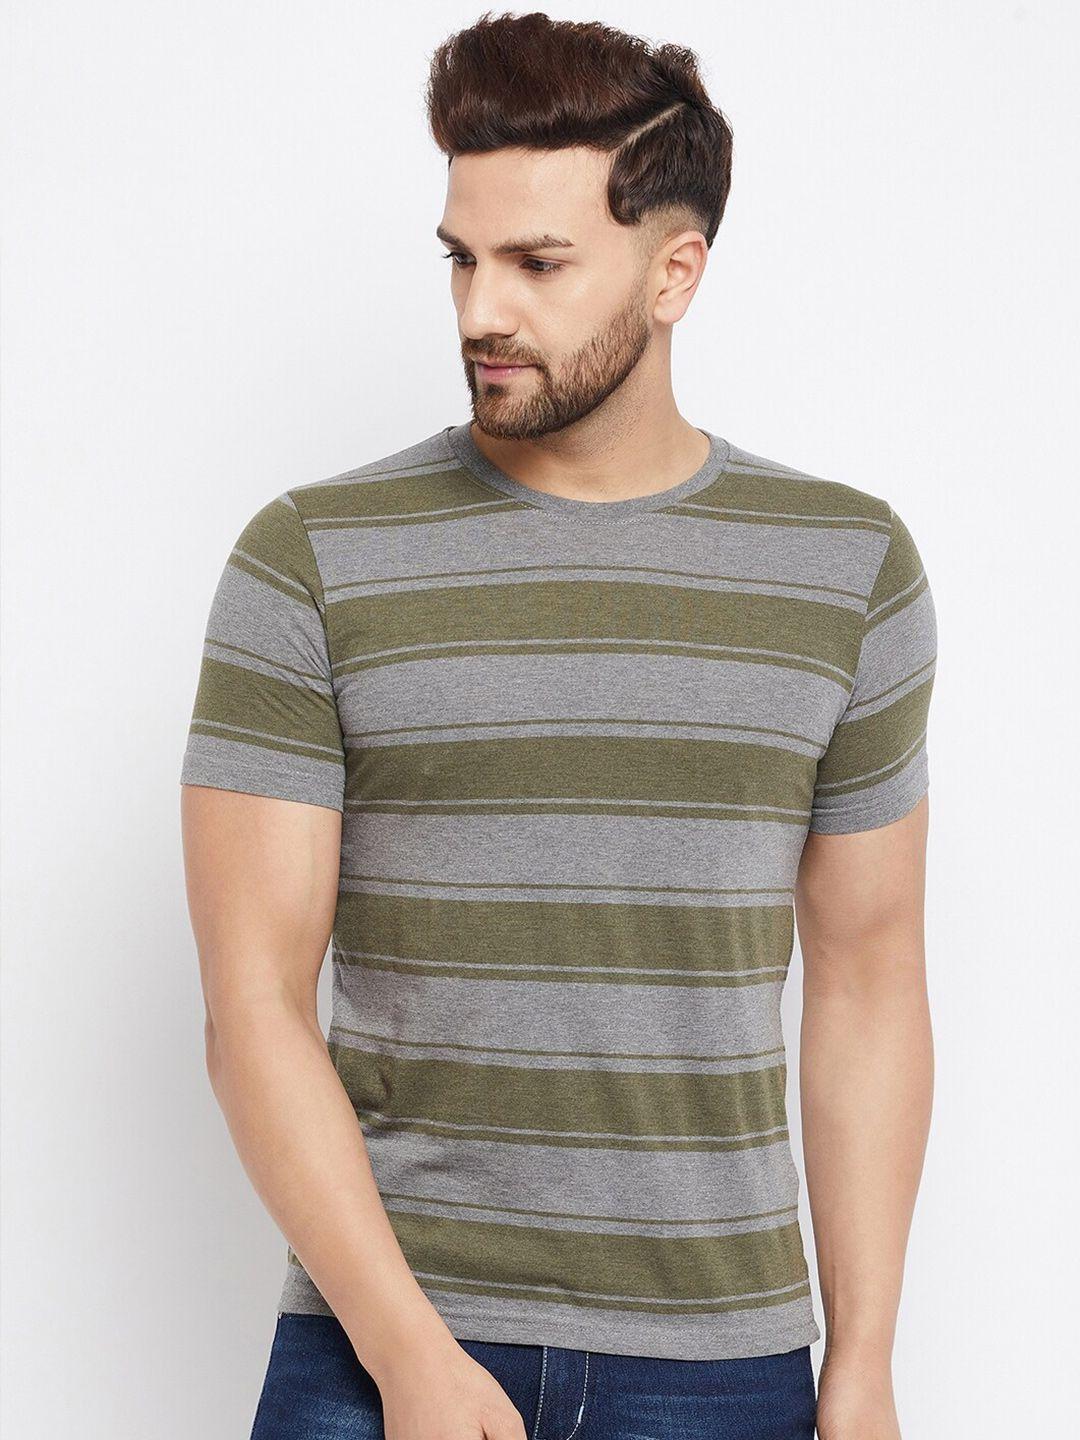 harbor-n-bay-men-cotton-striped-t-shirt